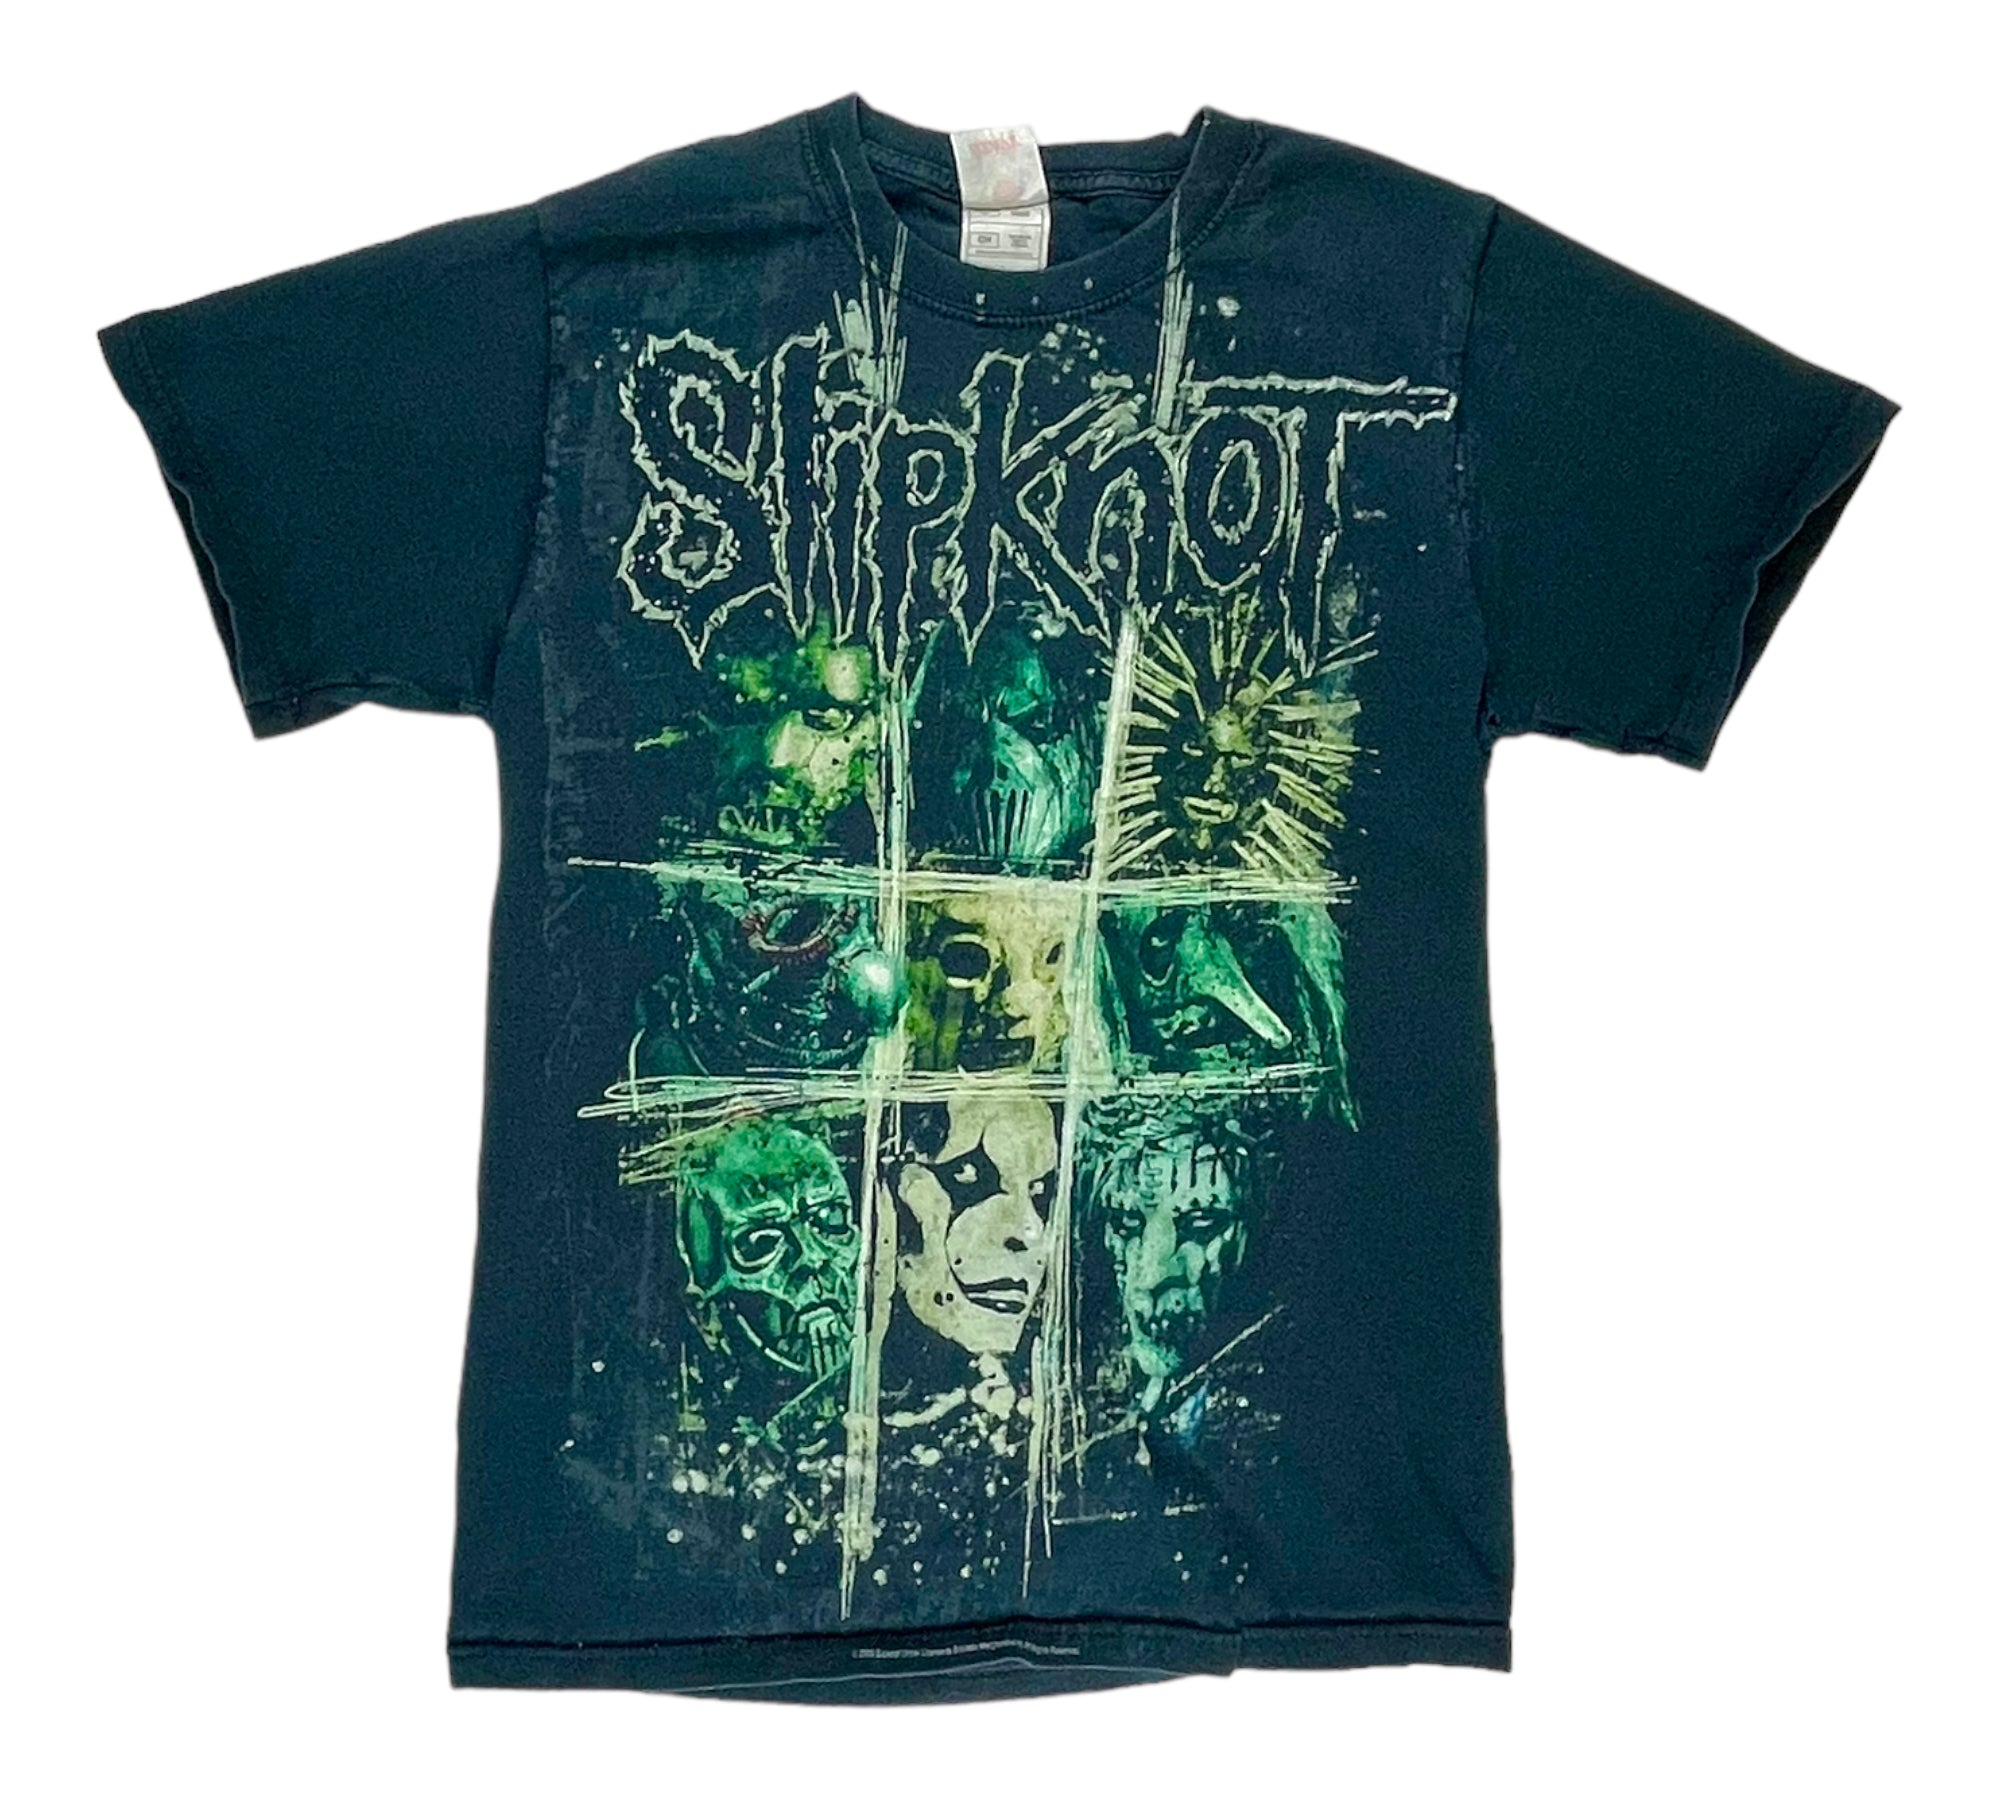 Vintage Slipknot All Hope Is Gone T-Shirt